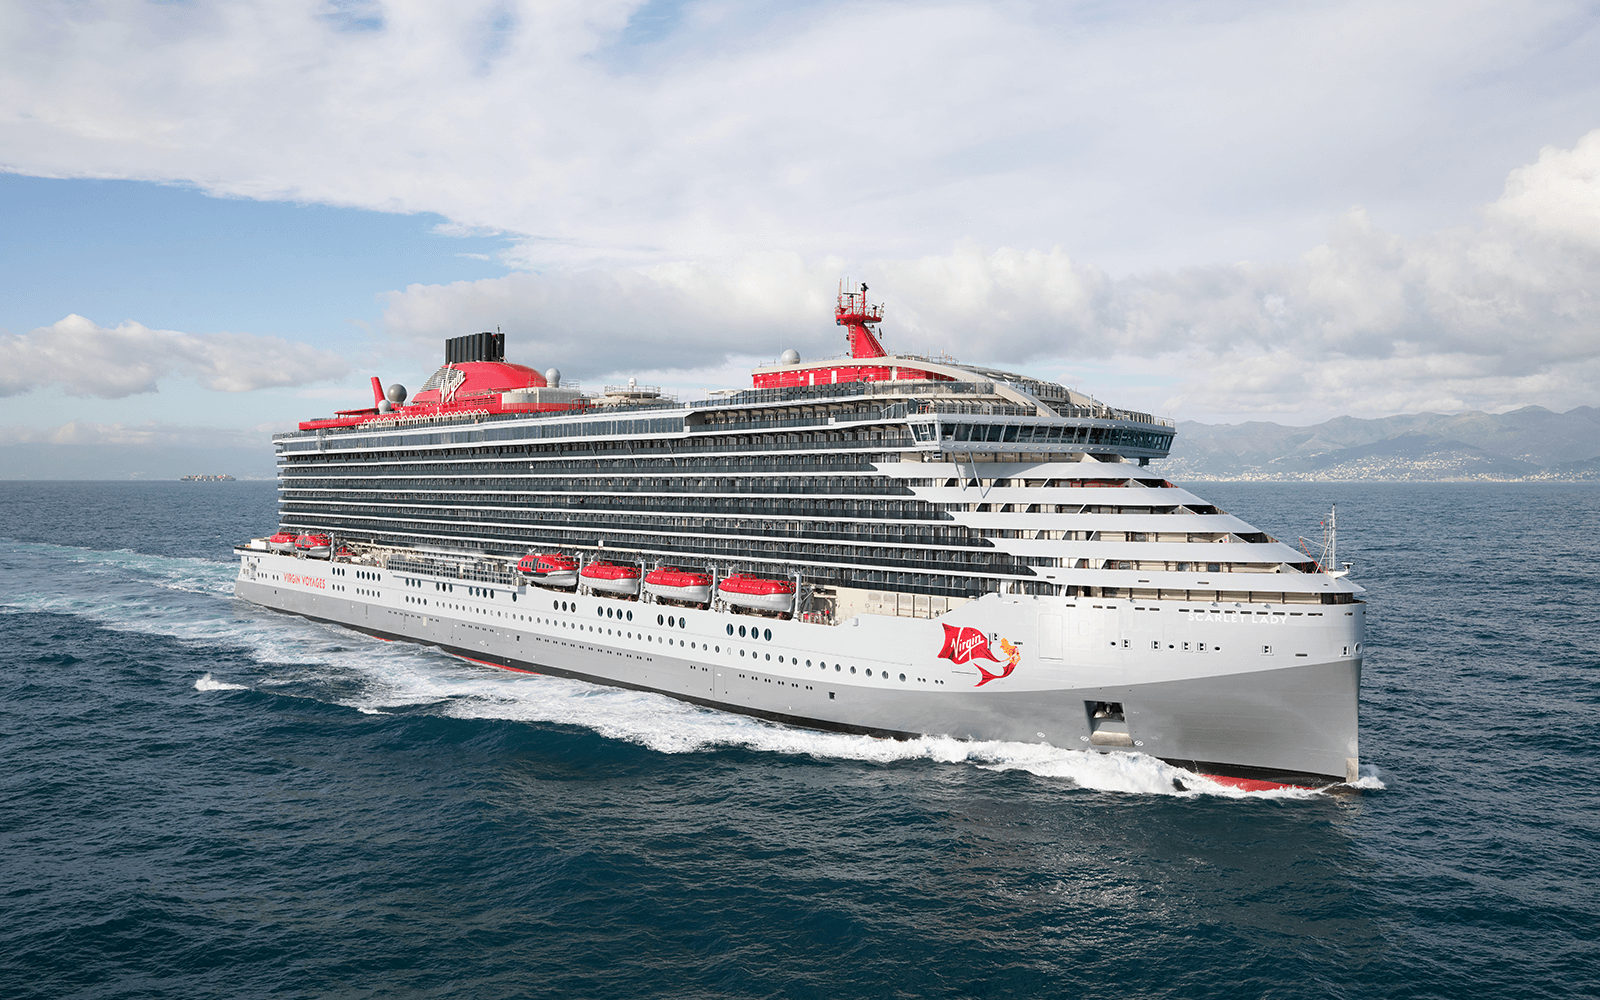 Virgin Voyages' Scarlet Lady cruise ship